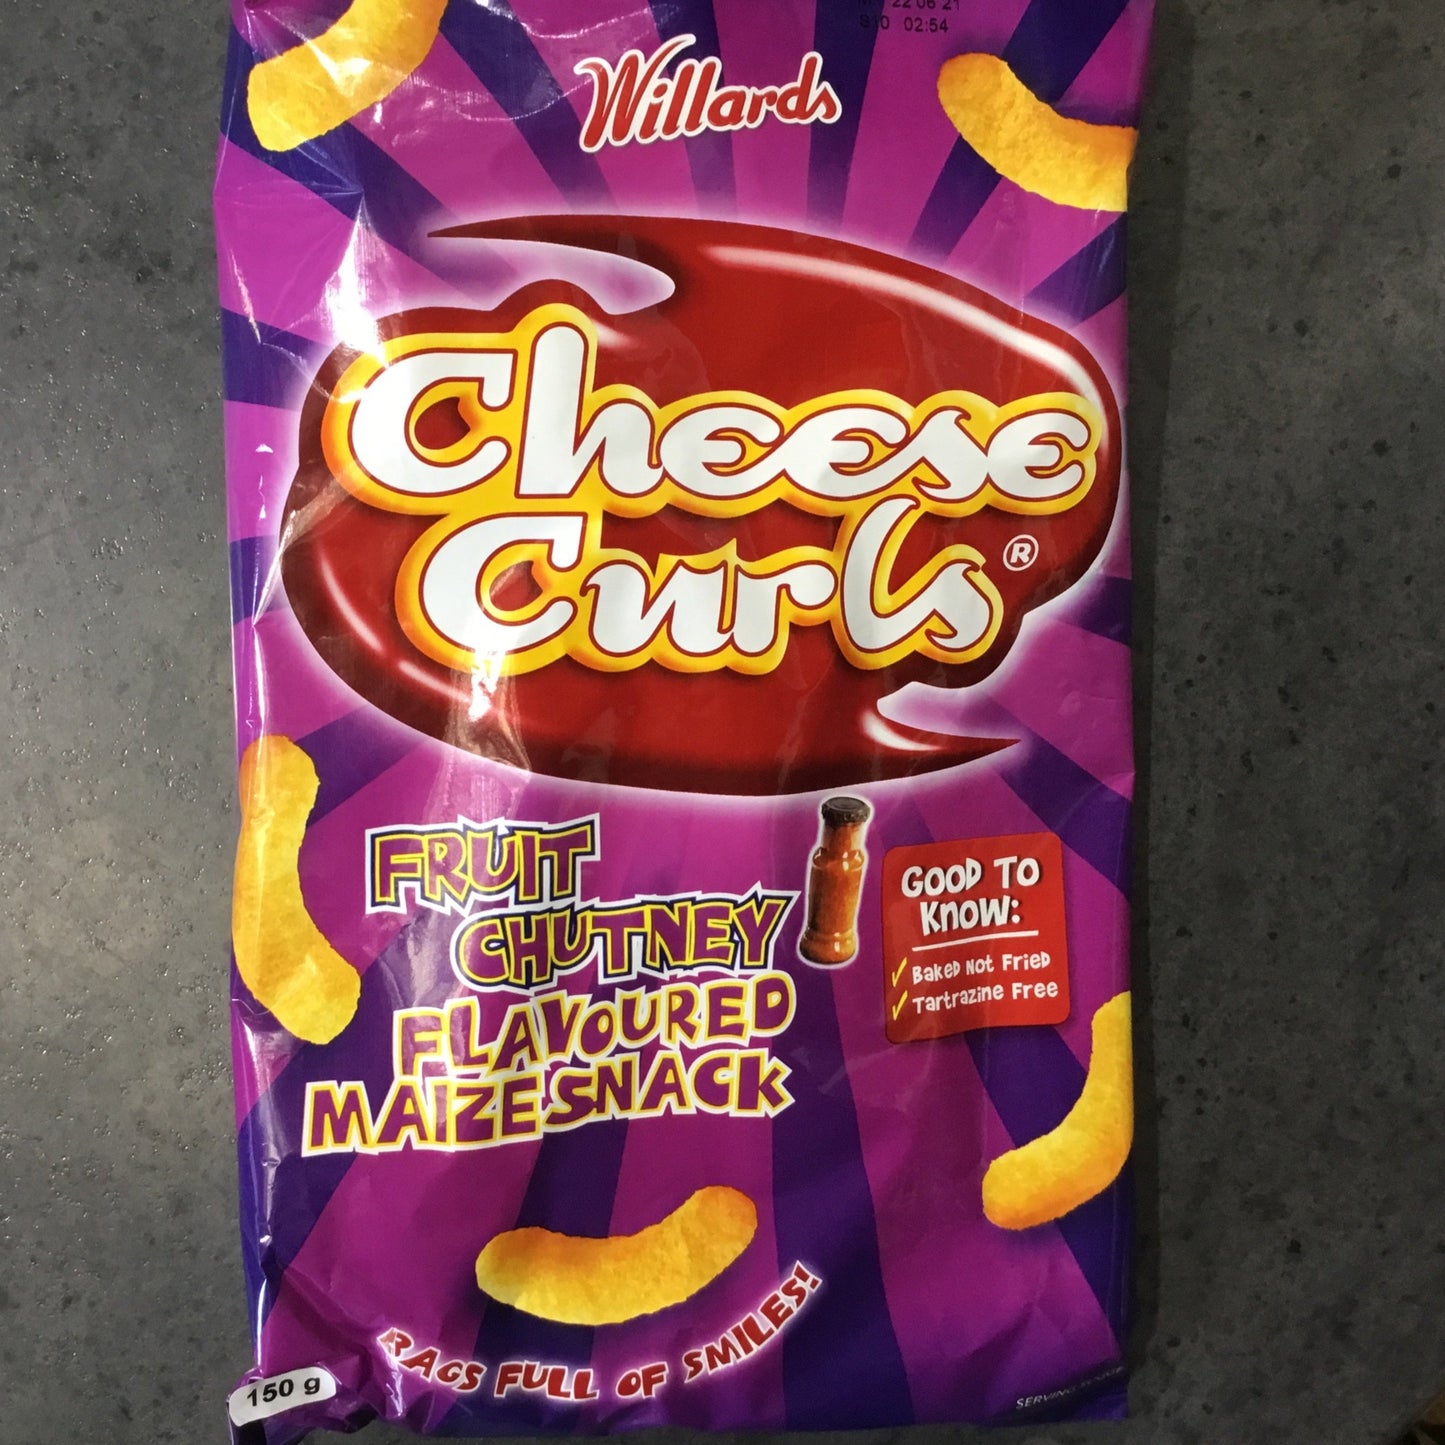 Willards Cheese Curls - Fruit Chutney 150g